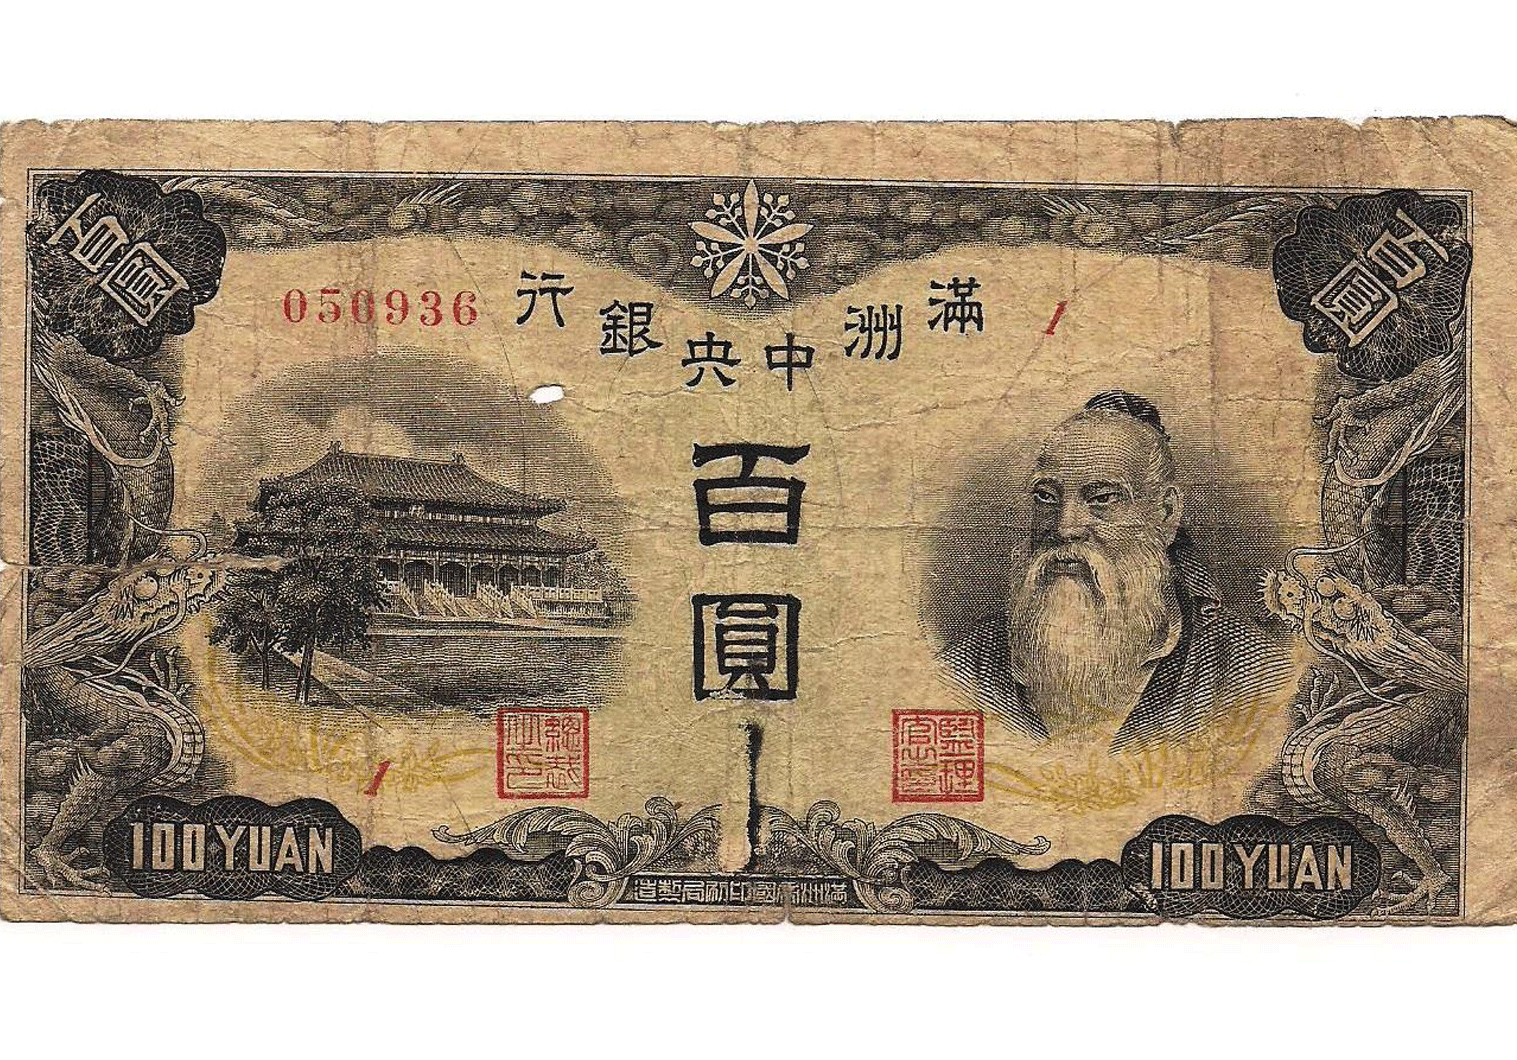 Manchurian banknote